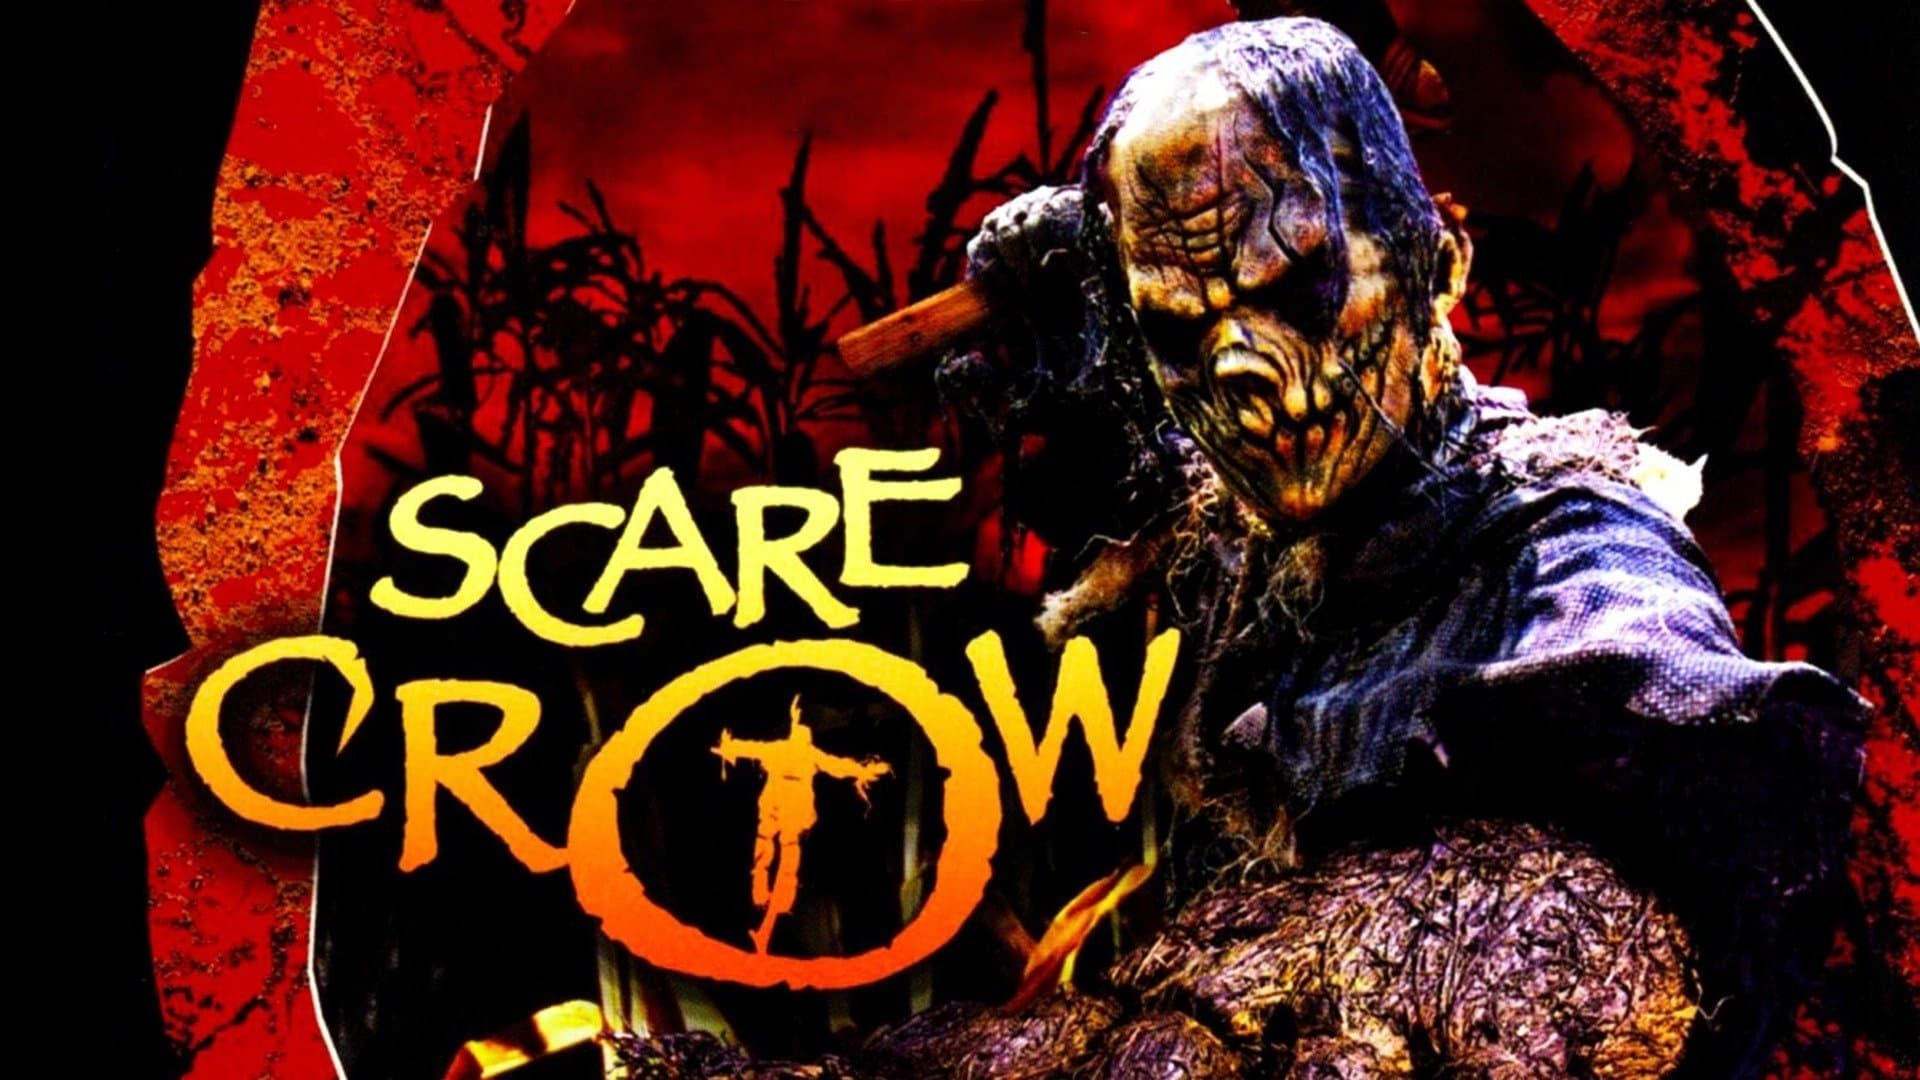 Scarecrow background